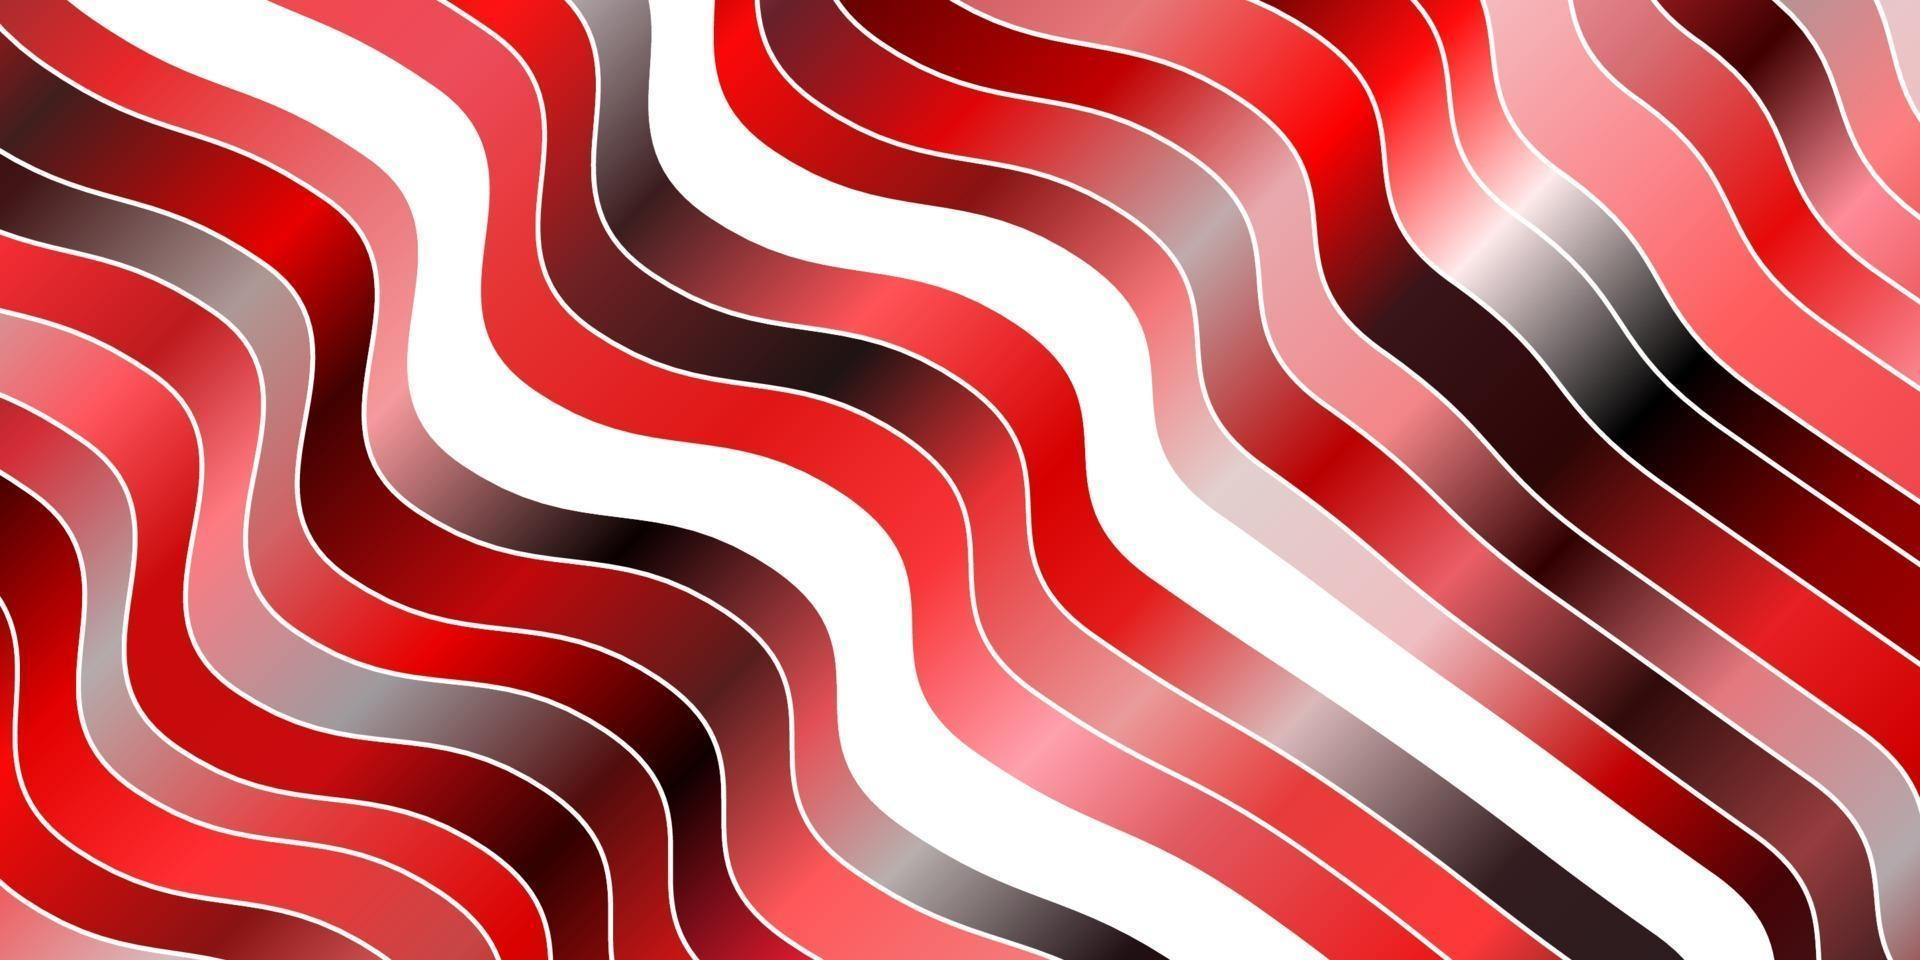 textura vector vermelho escuro com arco circular.